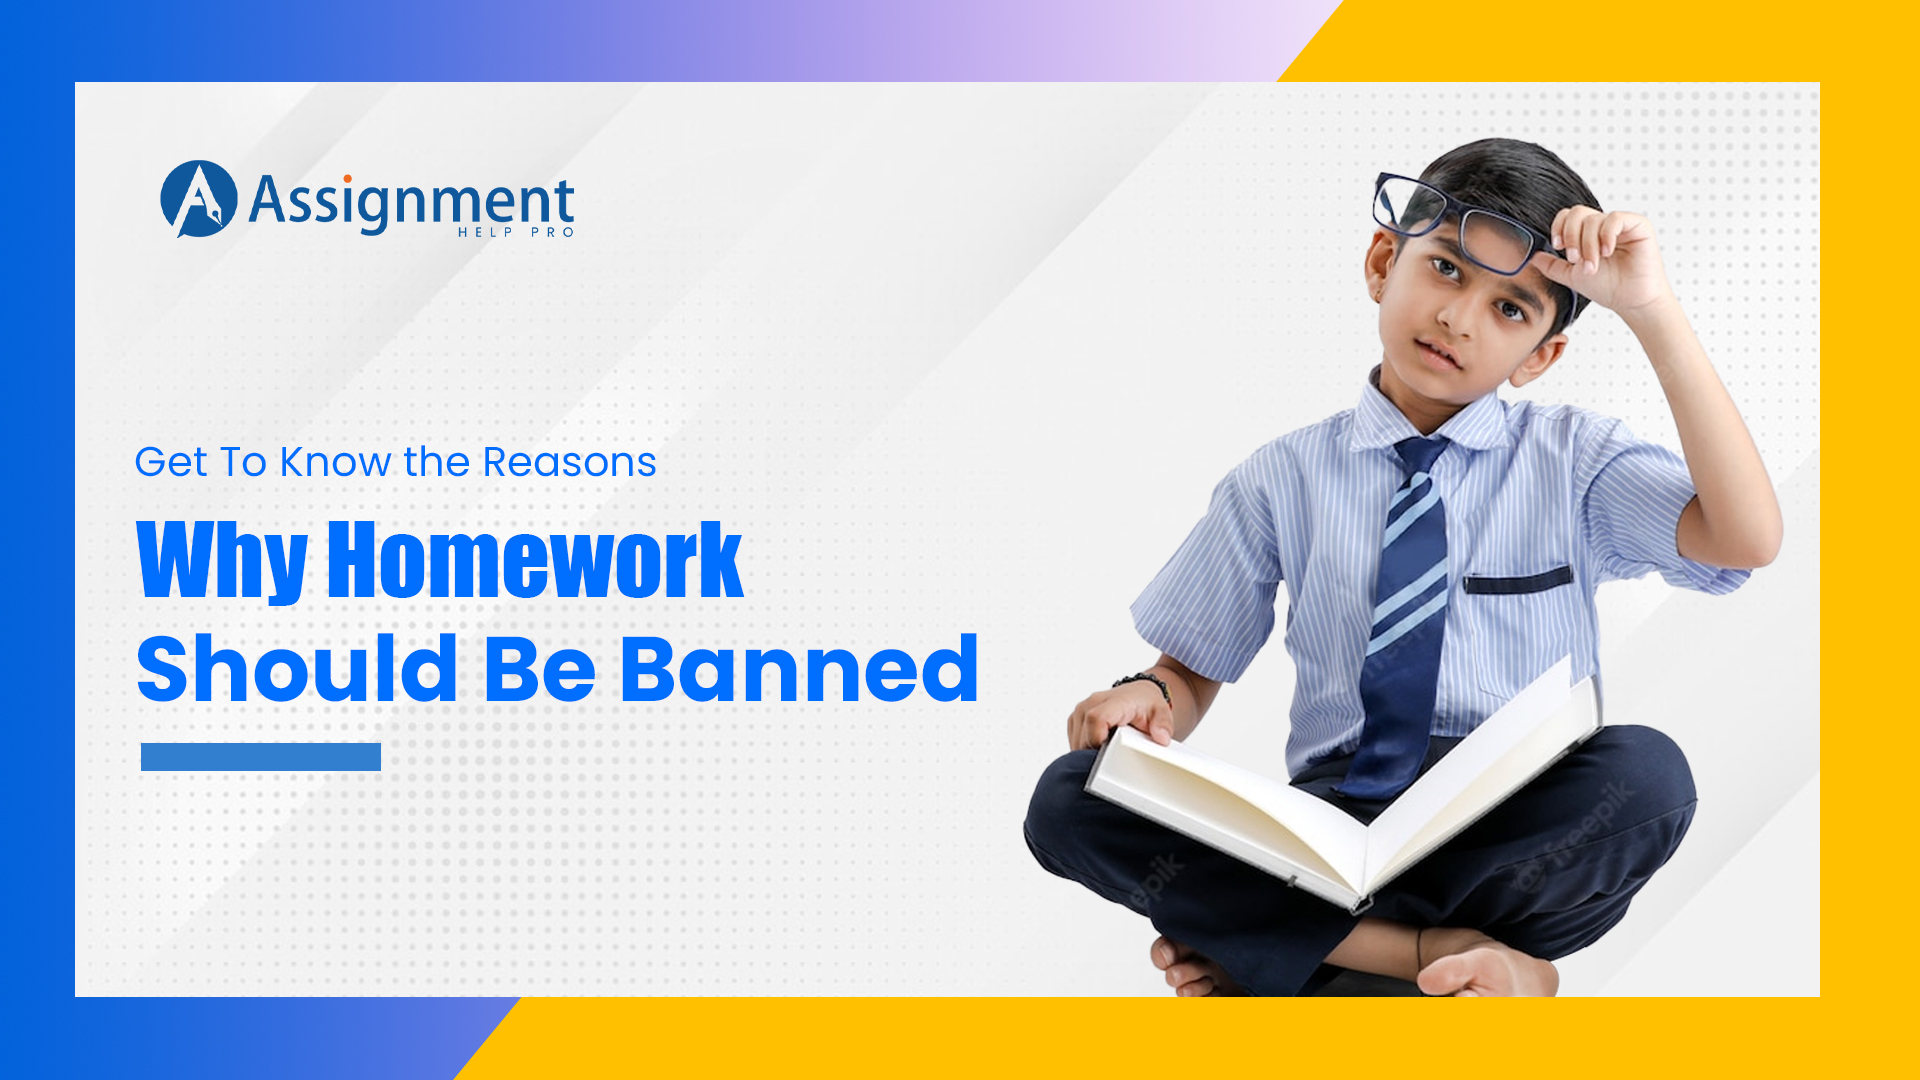 homework should be banned claim